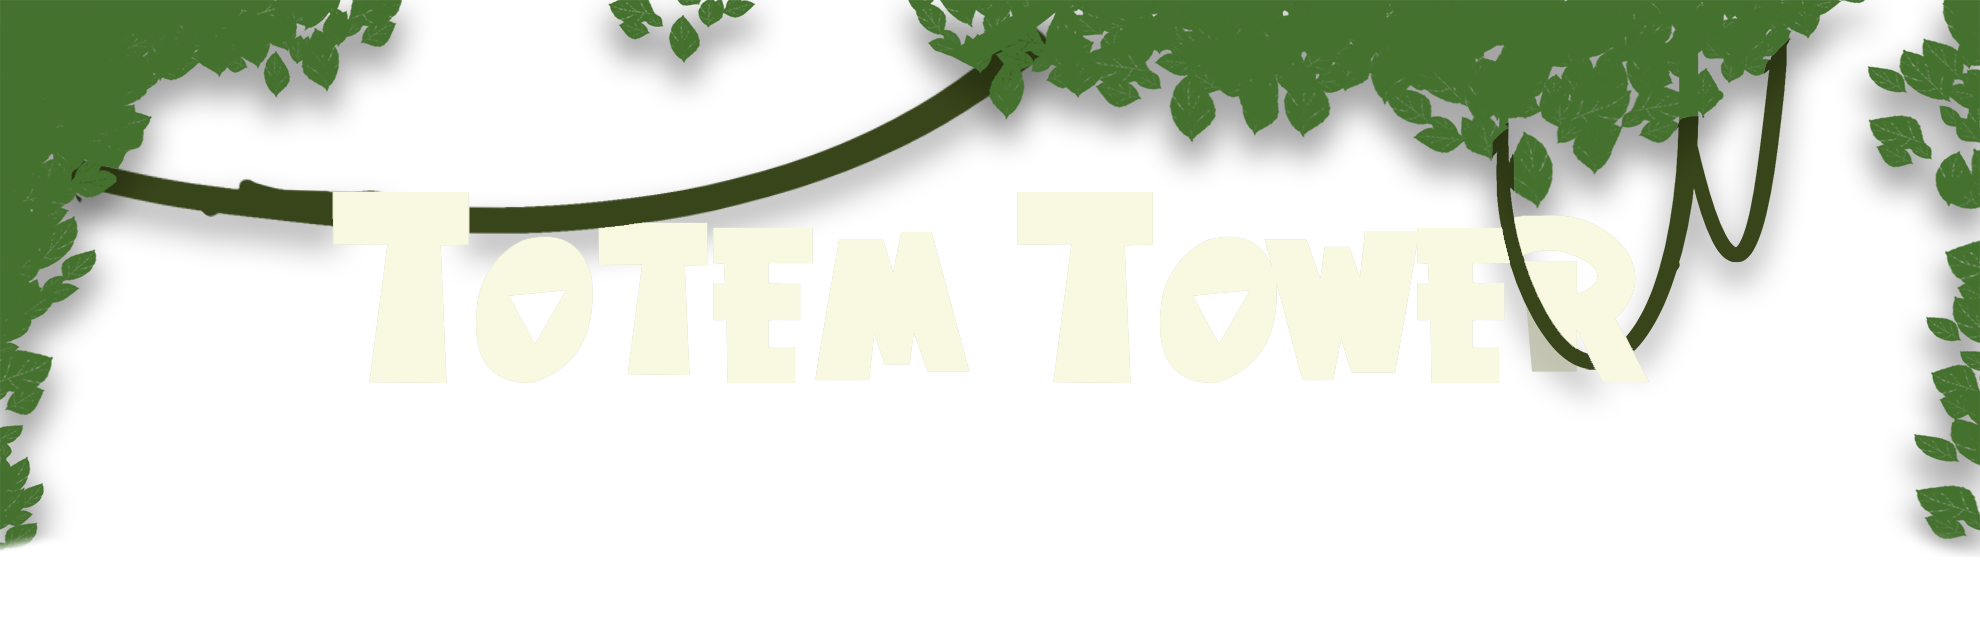 Totem Tower